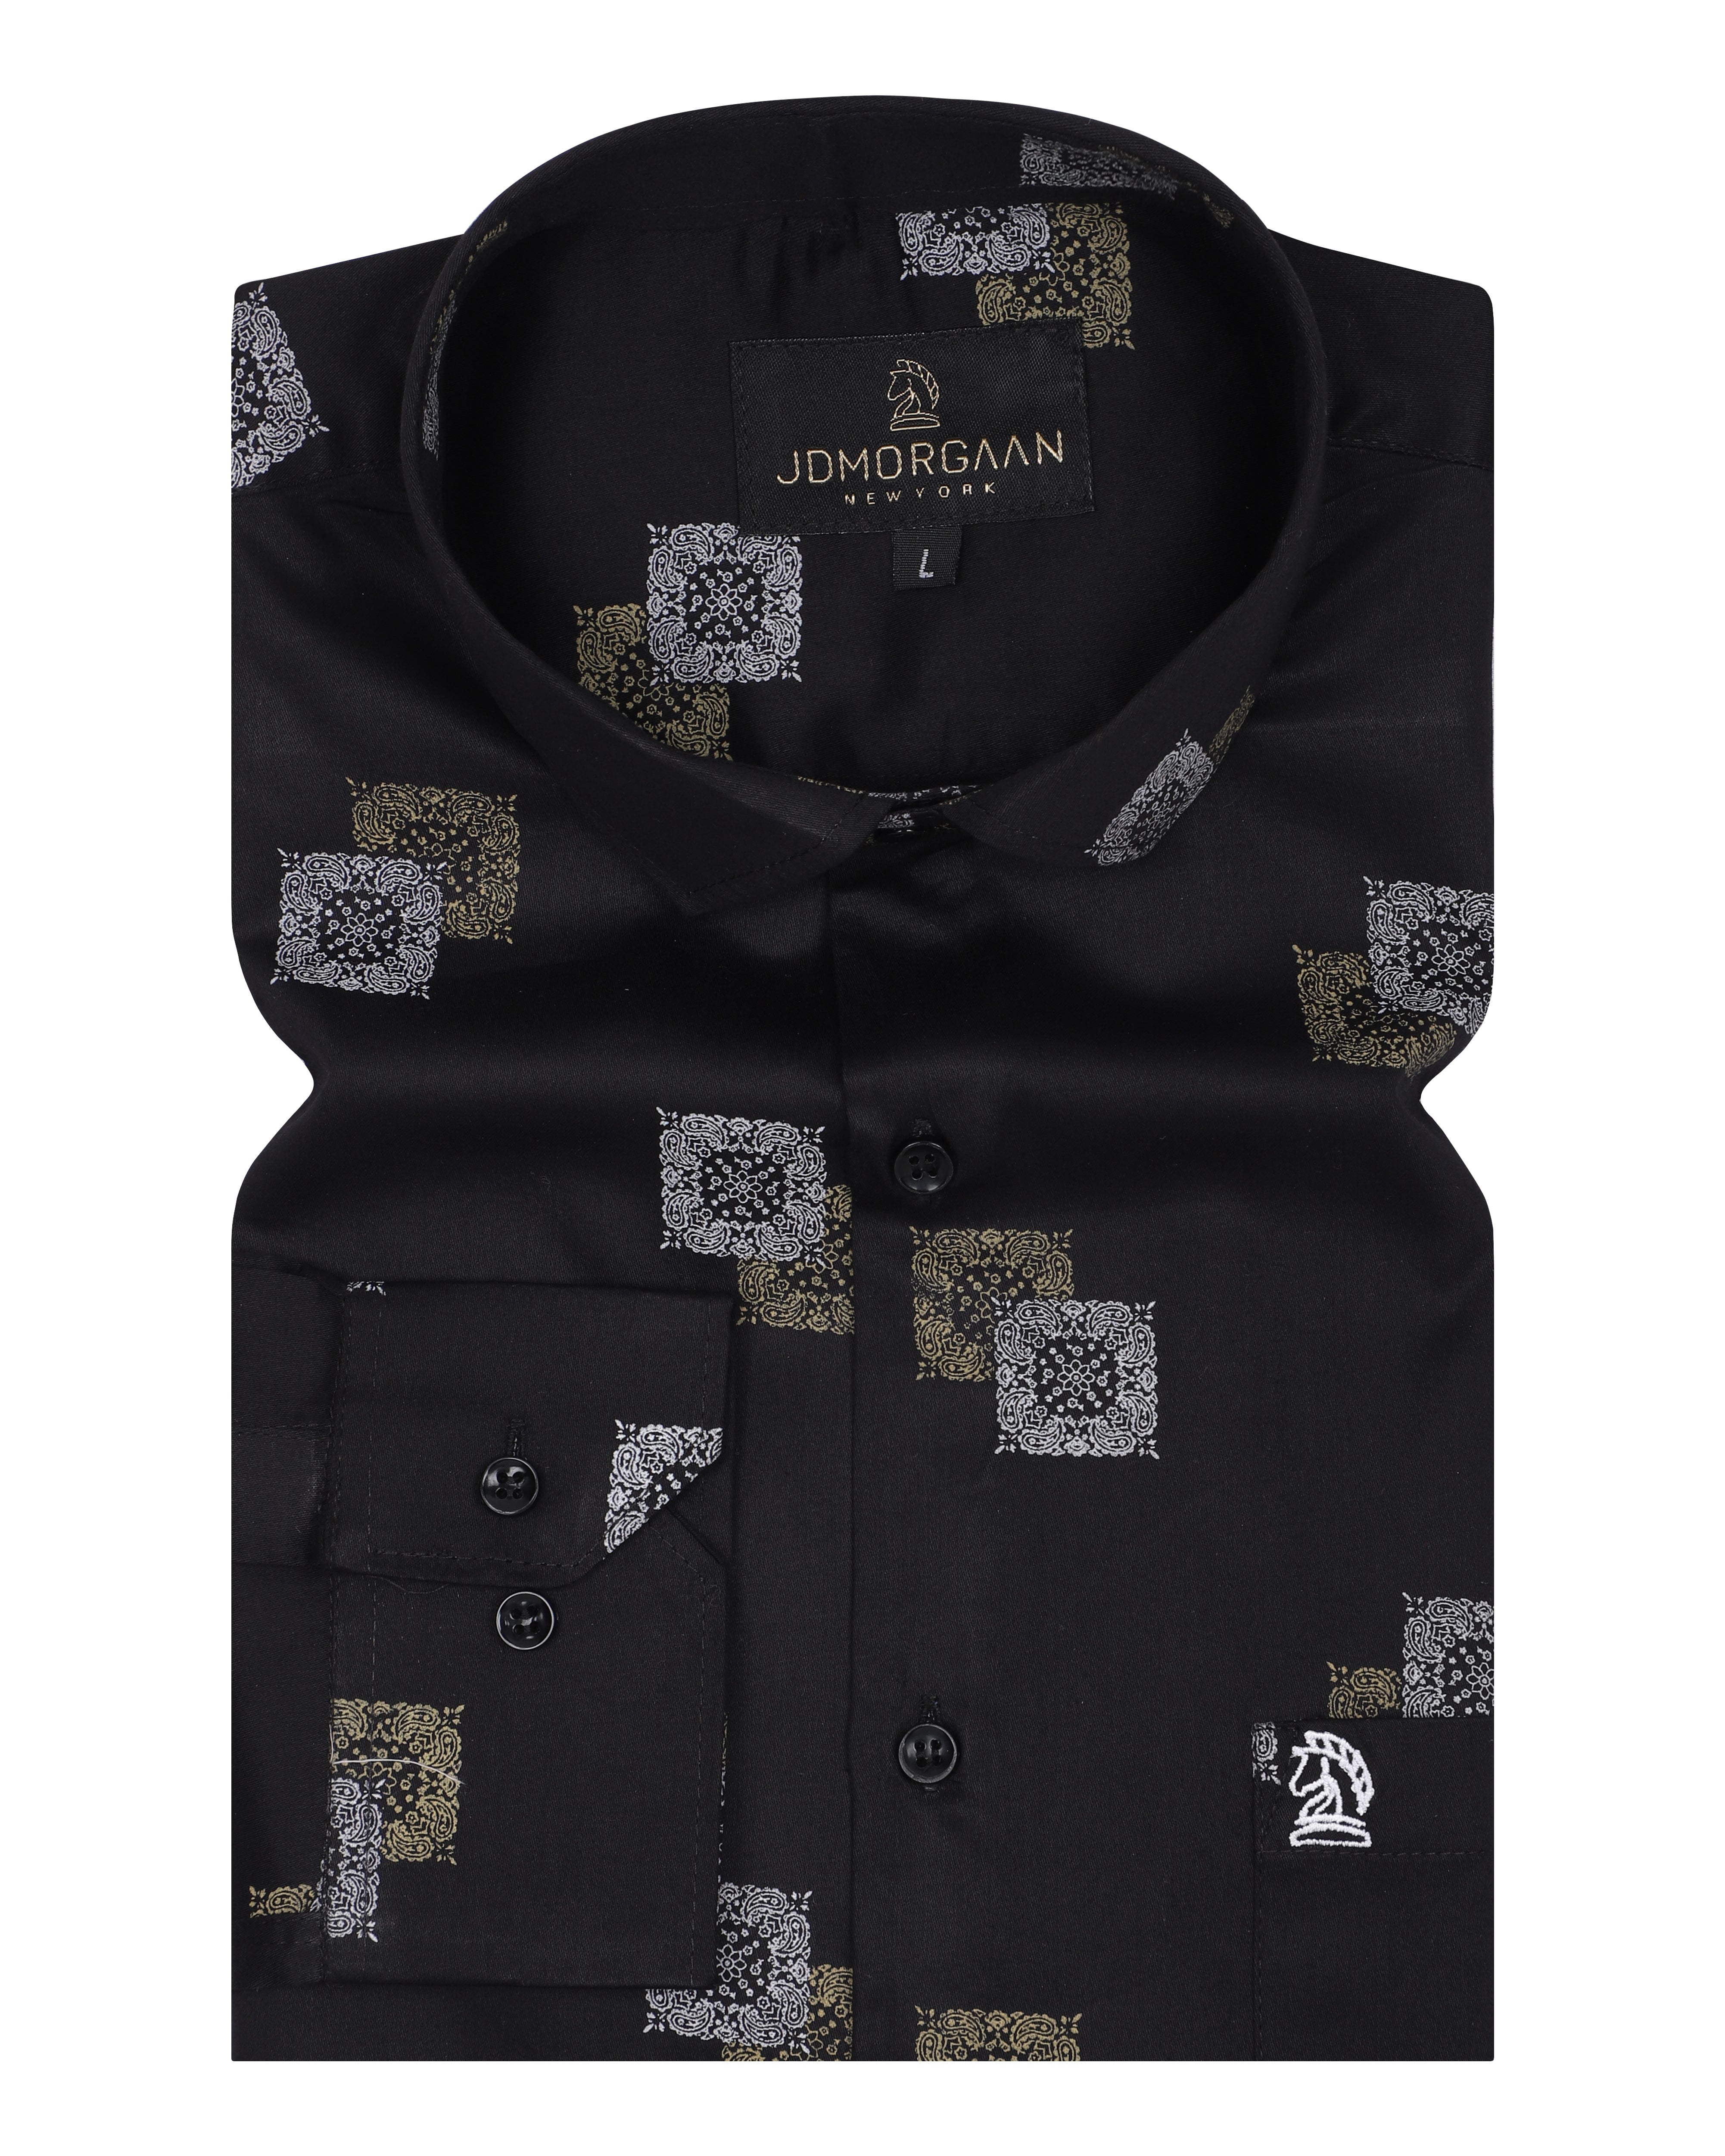 Fancy Digital Print Black Printed Premium Cotton Shirt